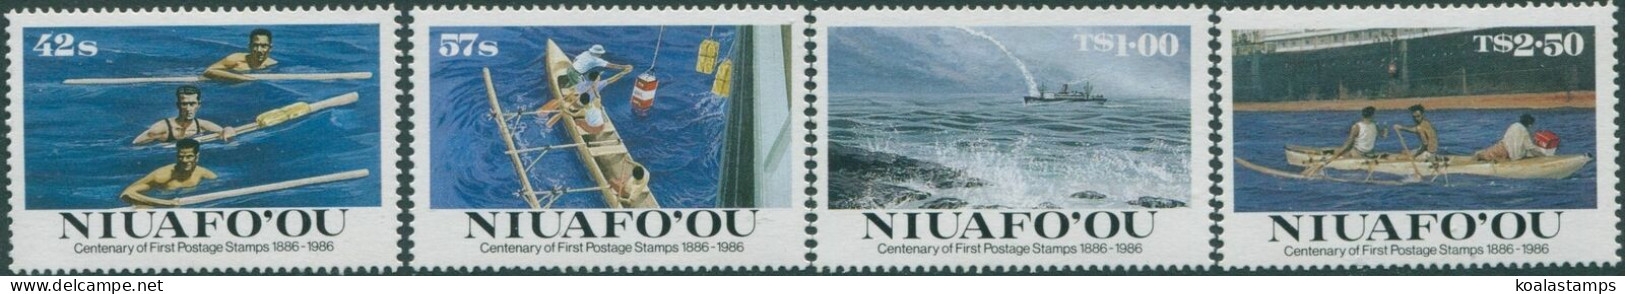 Niuafo'ou 1986 SG85-88 First Stamps Set MNH - Tonga (1970-...)